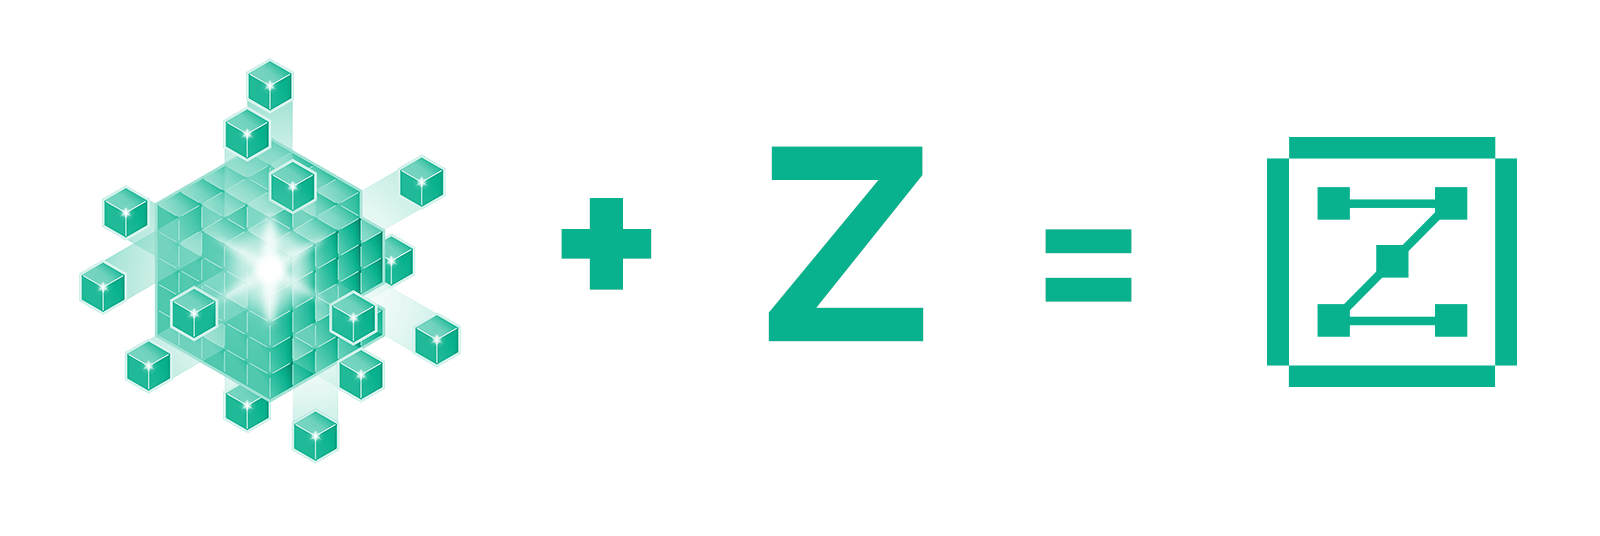 zdba logo build